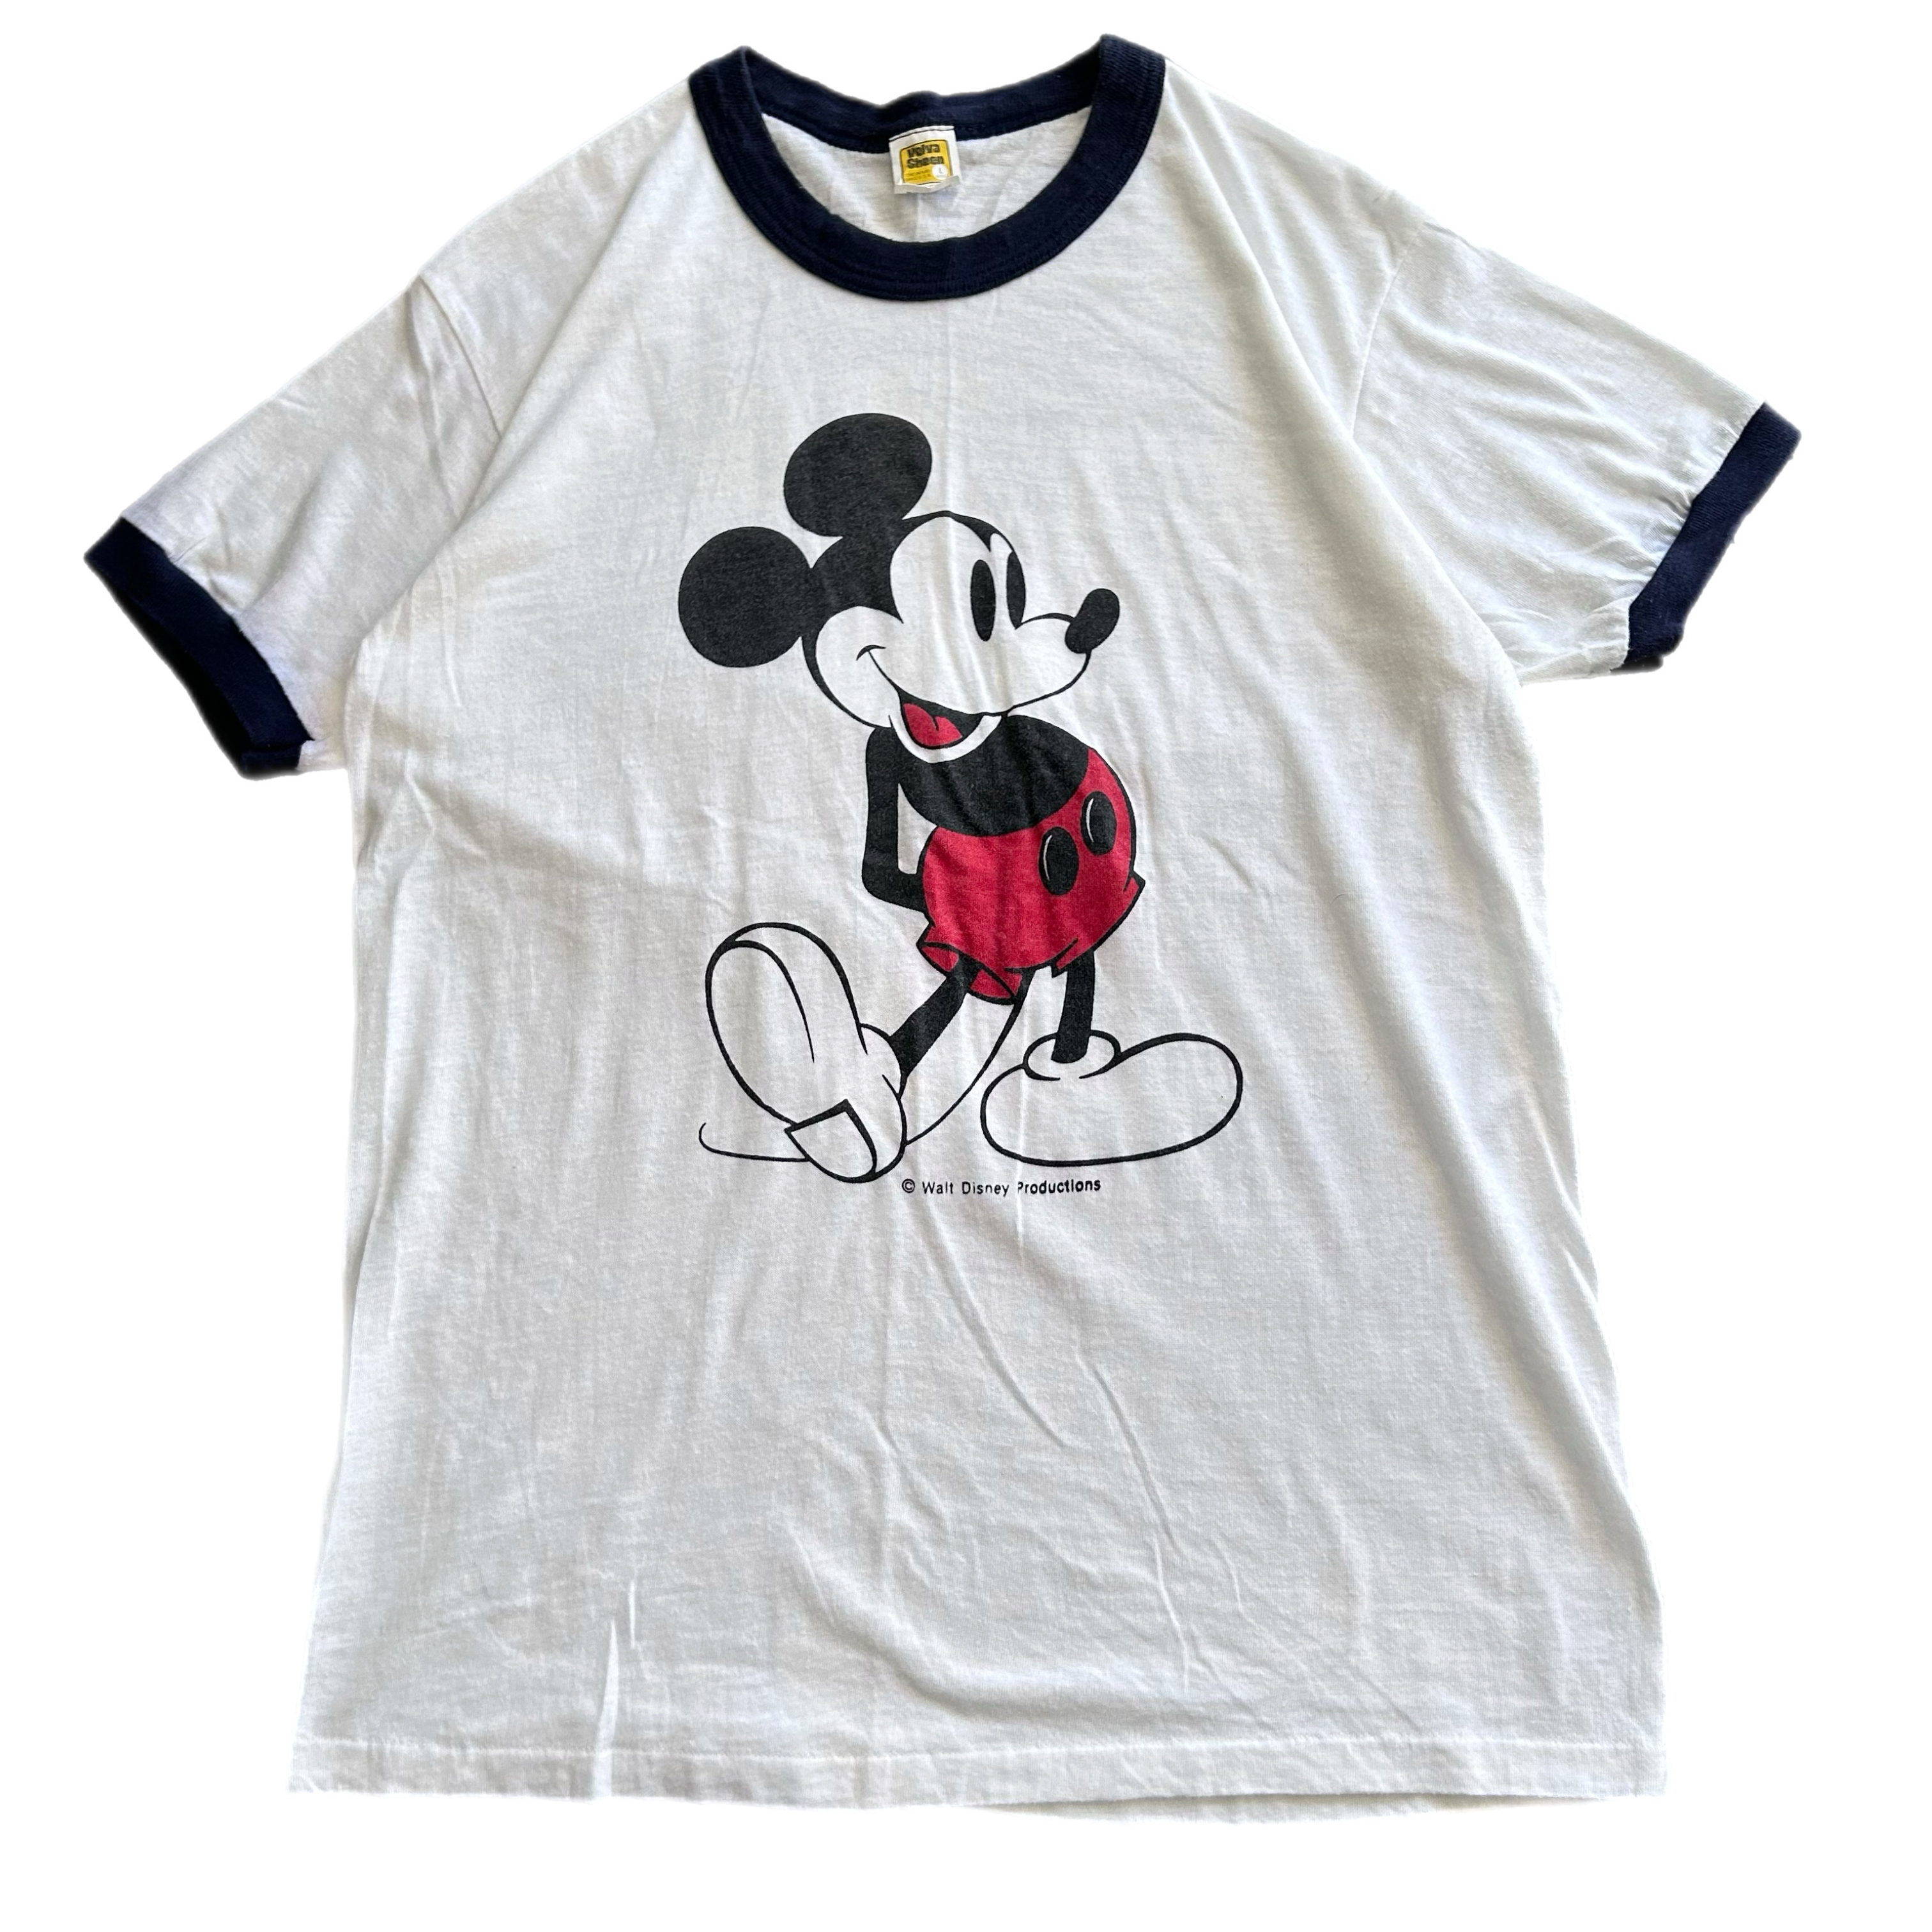 Vintage 1970’s Disney Mickey Mouse Tee